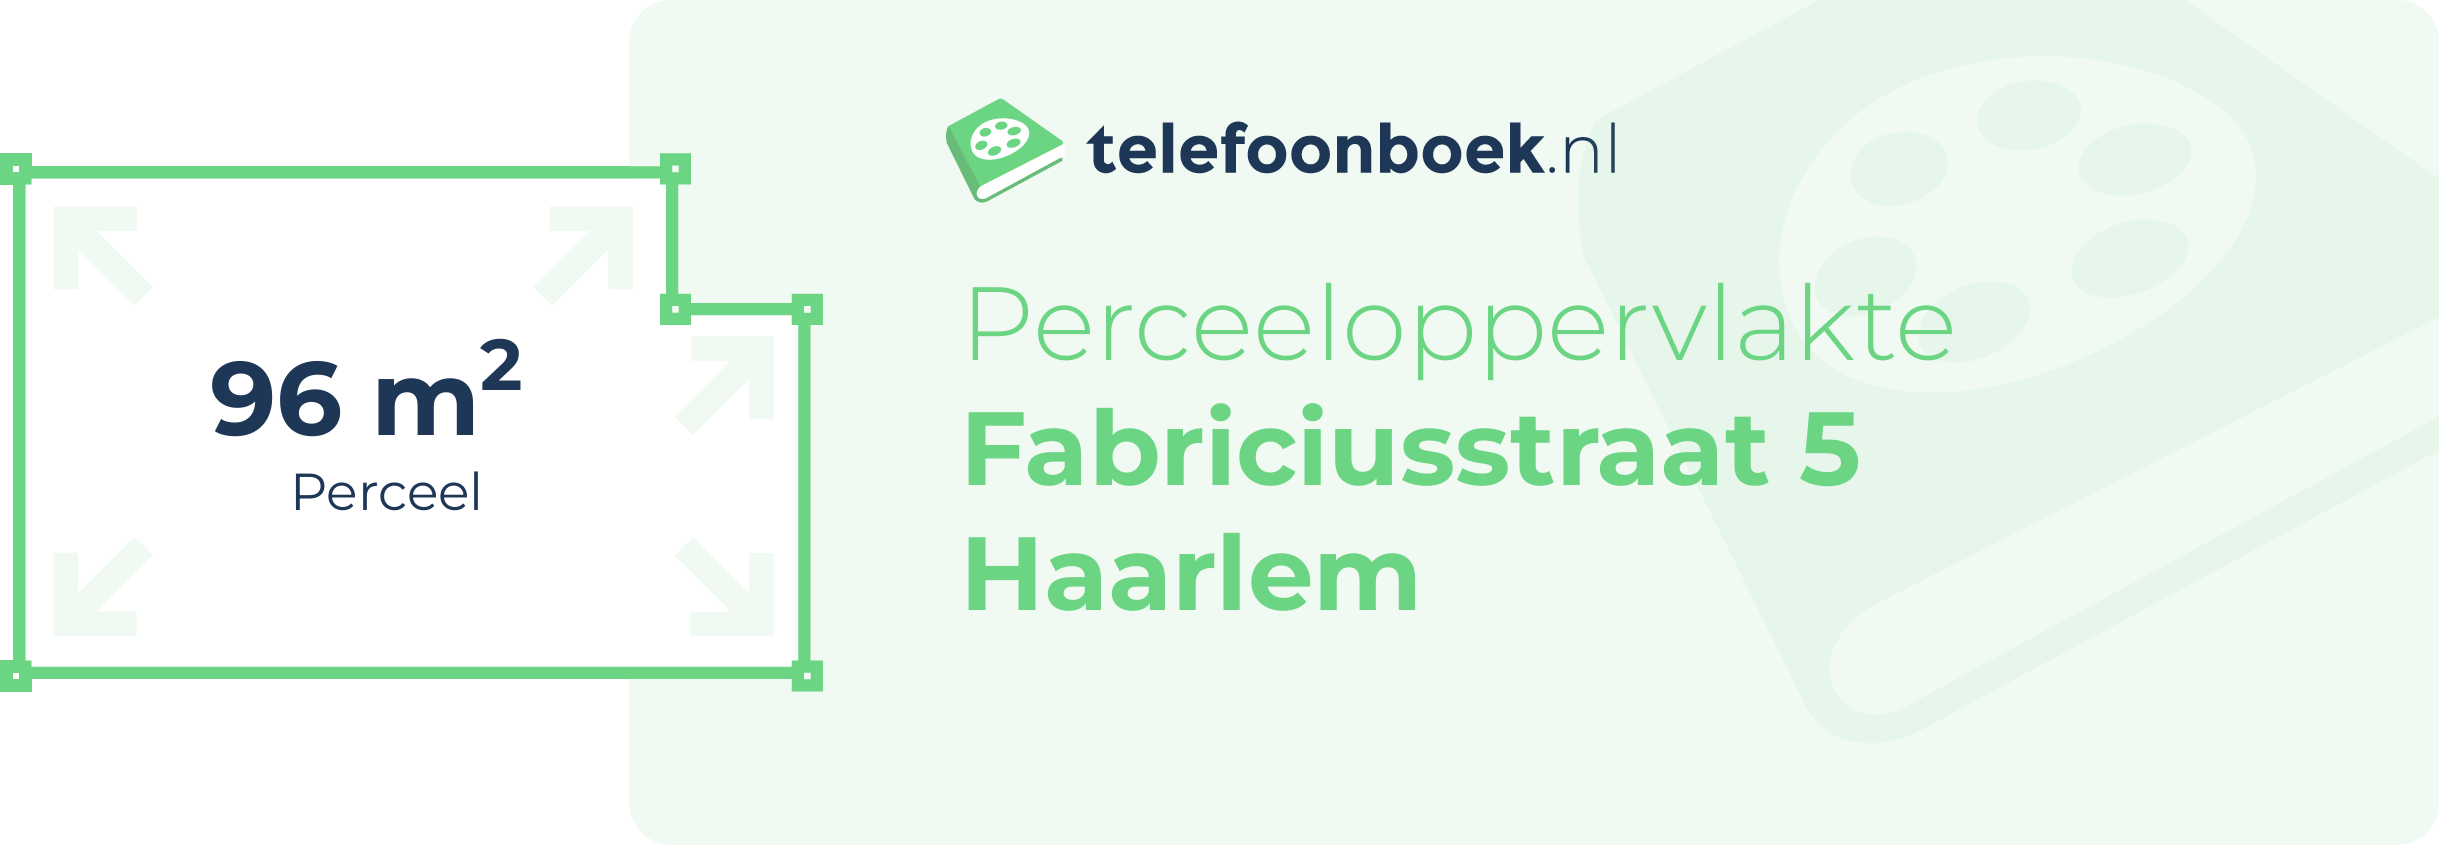 Perceeloppervlakte Fabriciusstraat 5 Haarlem